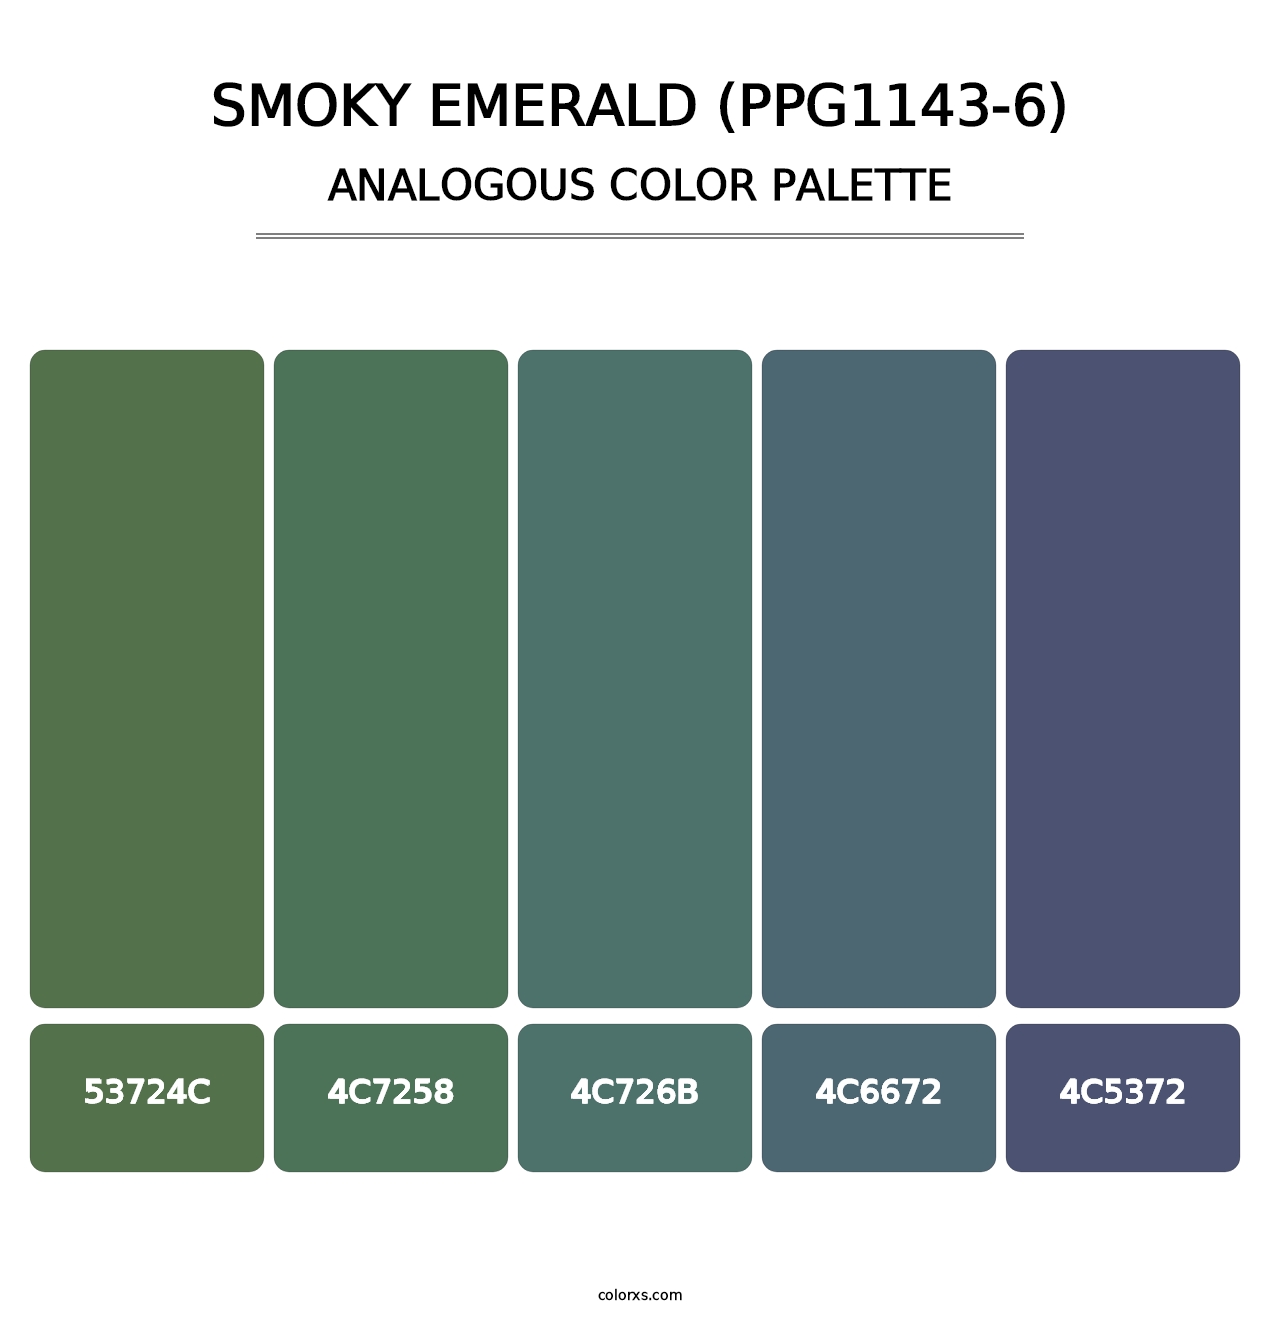 Smoky Emerald (PPG1143-6) - Analogous Color Palette